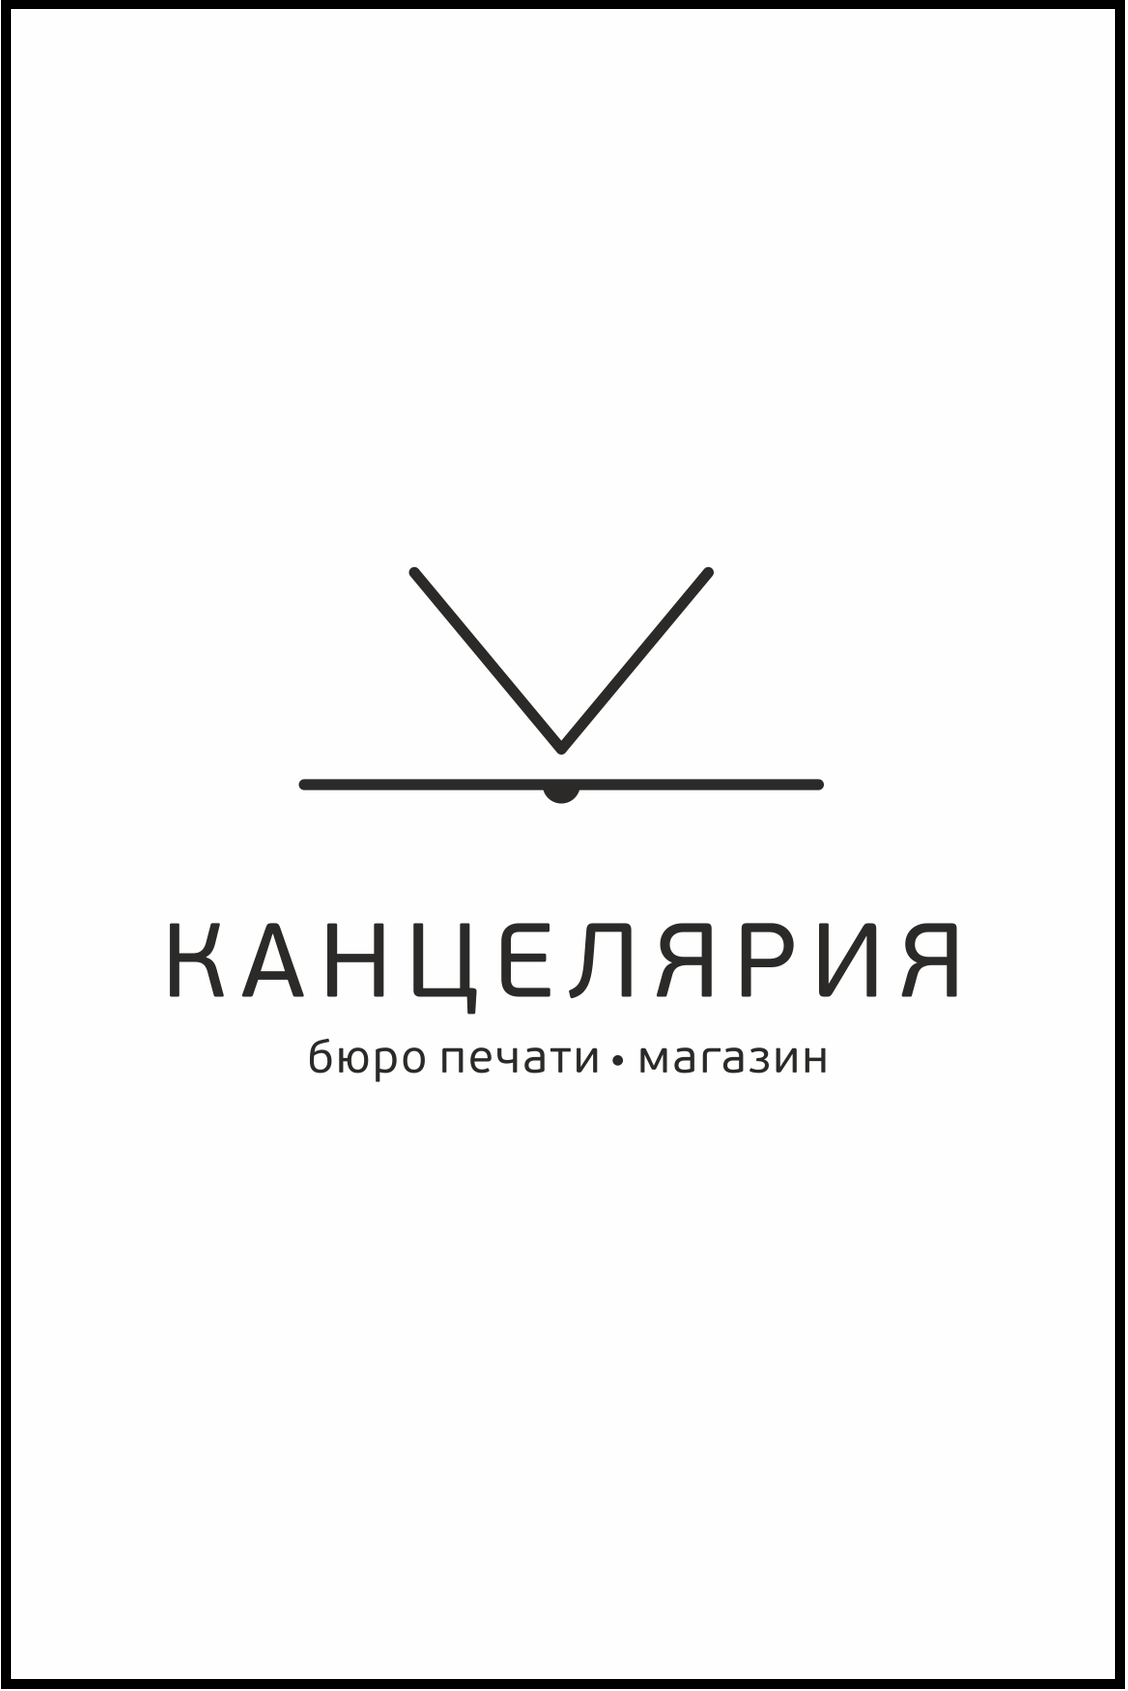 Logo k